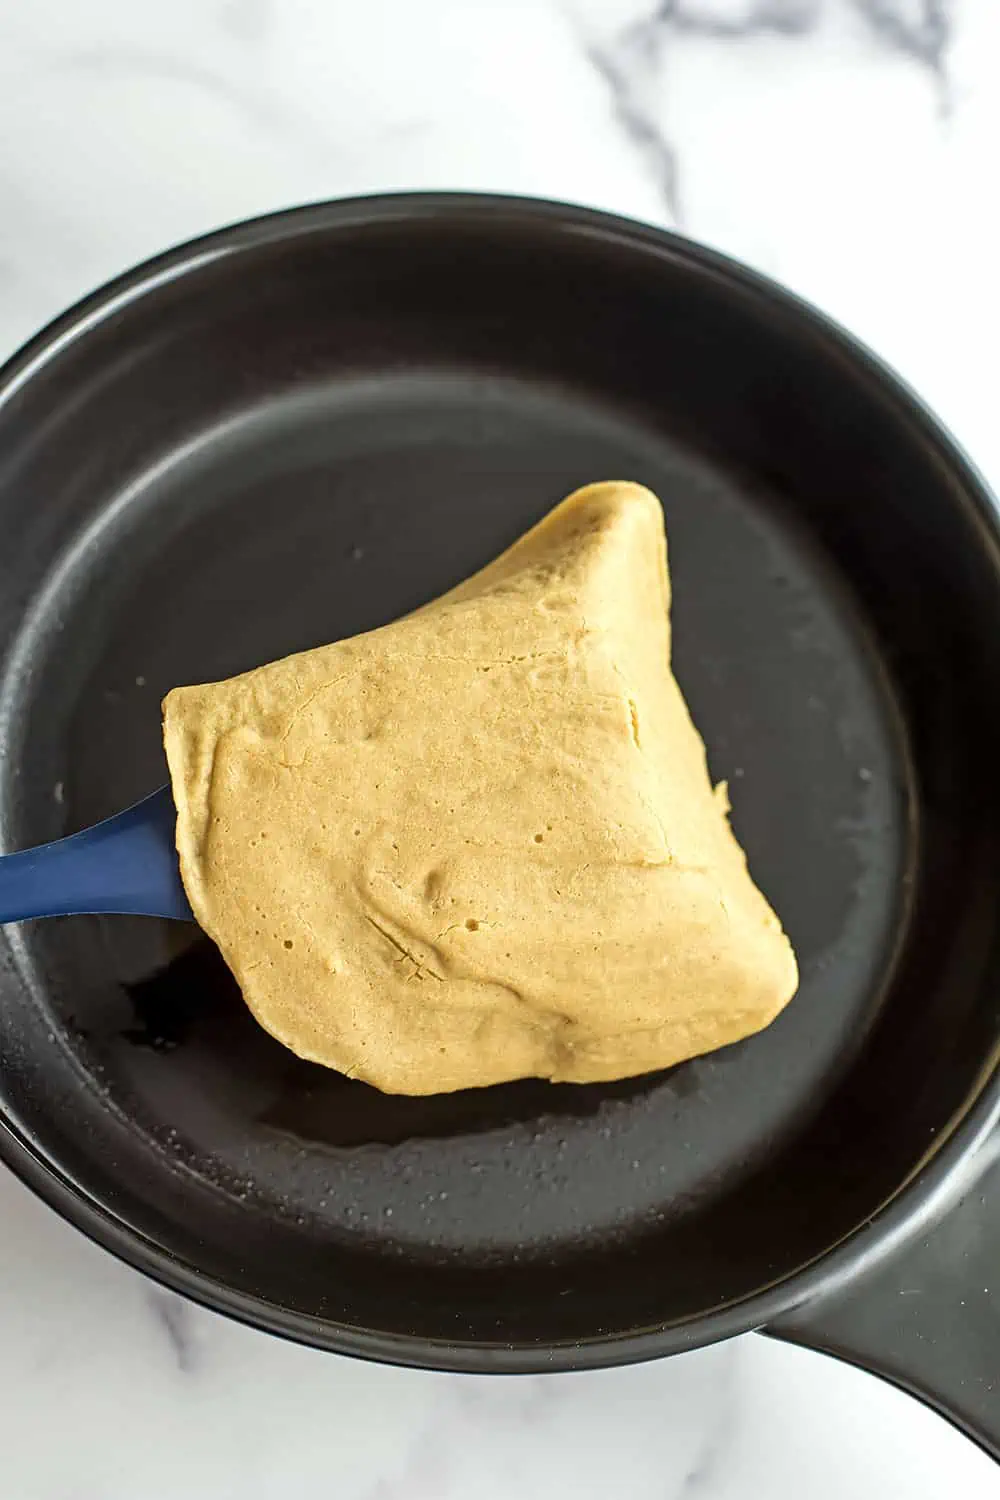 Blue spatula flipping oat flour tortilla.